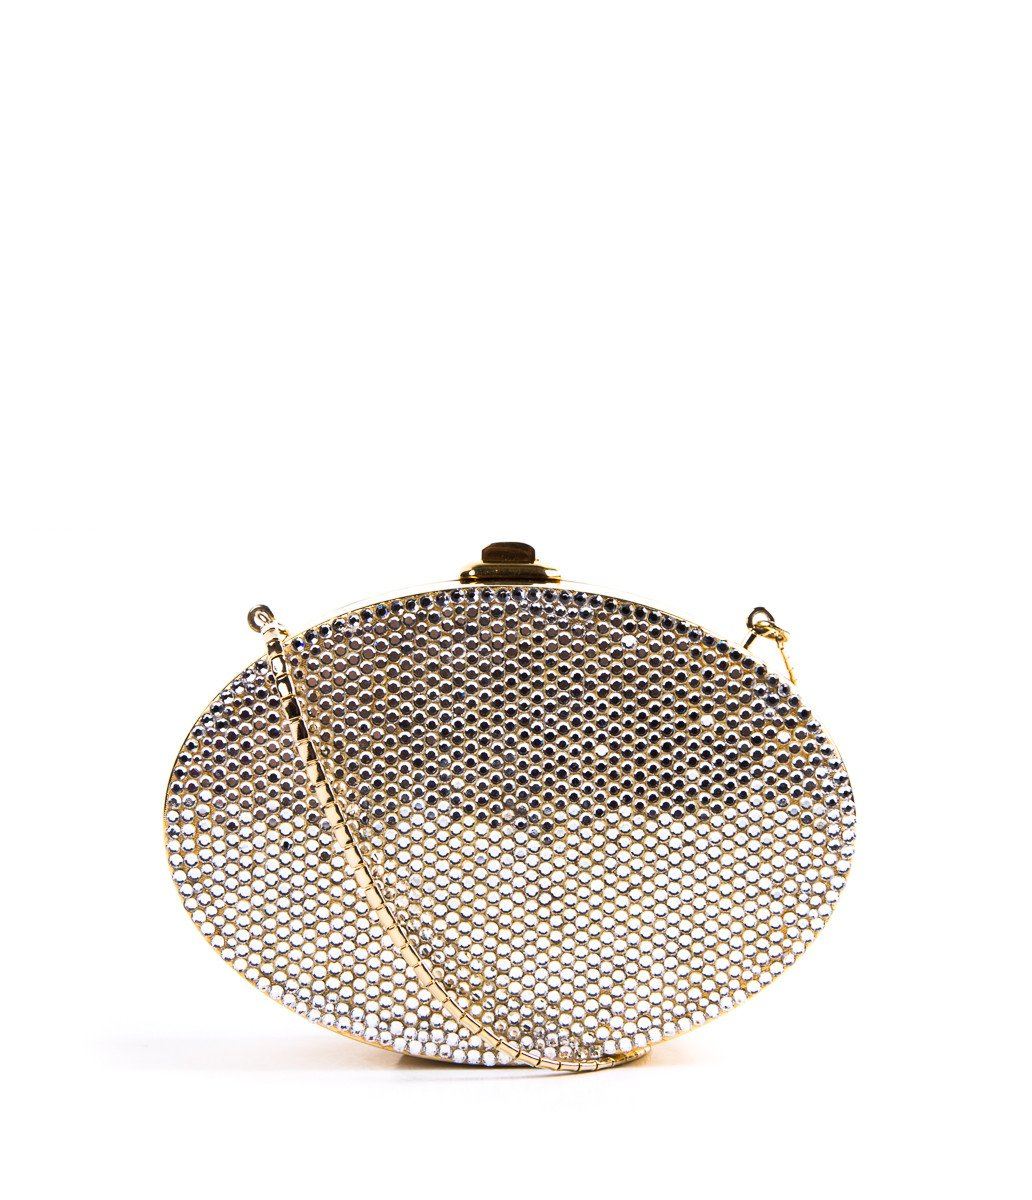 Vintage Oval Shape Crystal Clutch | Top Handle Bag | Leave Clutch